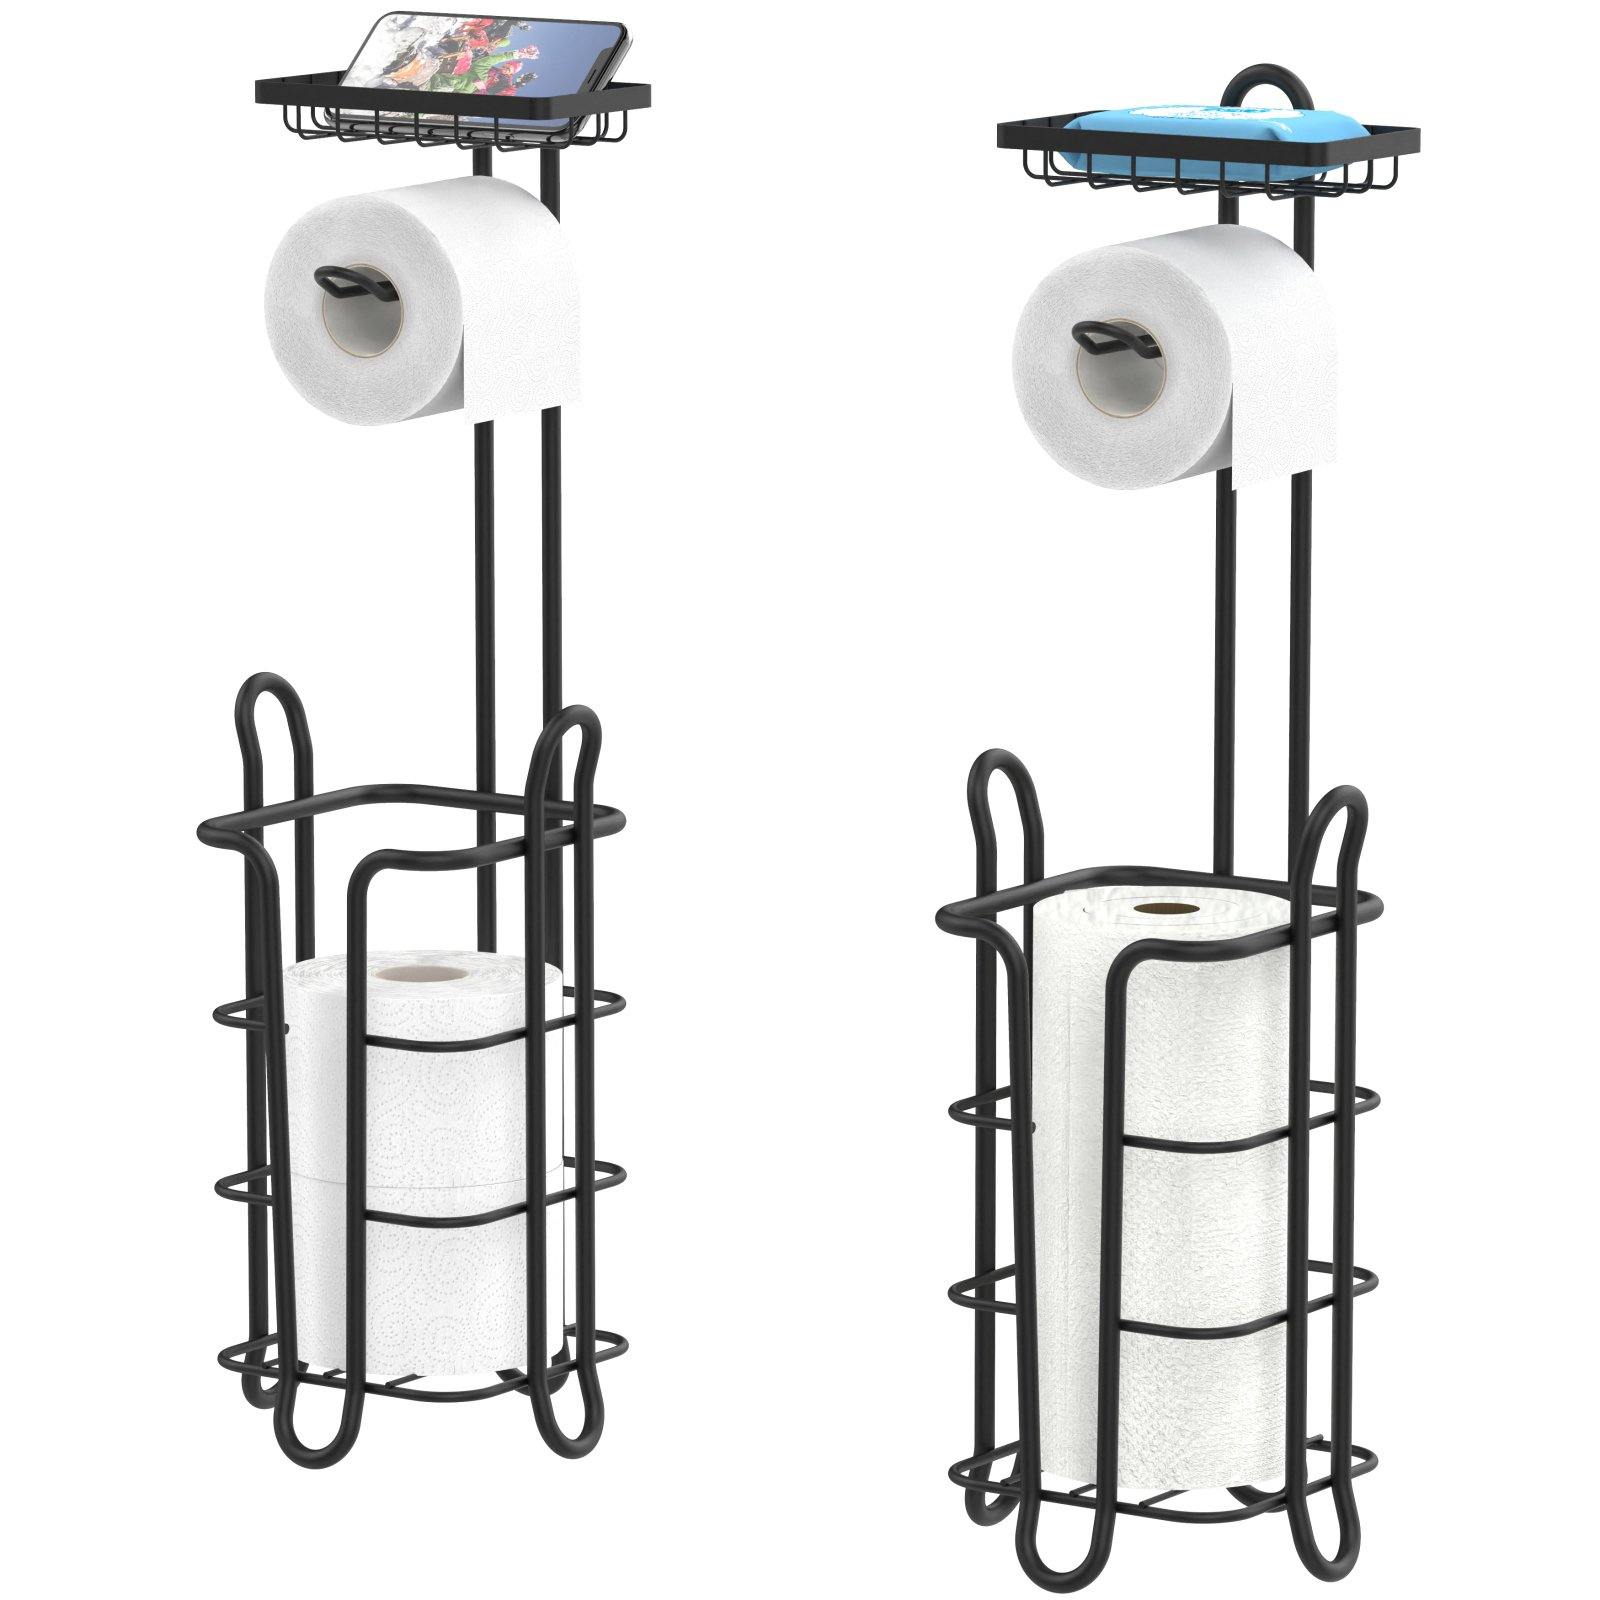 Toilet Paper Holder Stand (2 Pack) - HN01